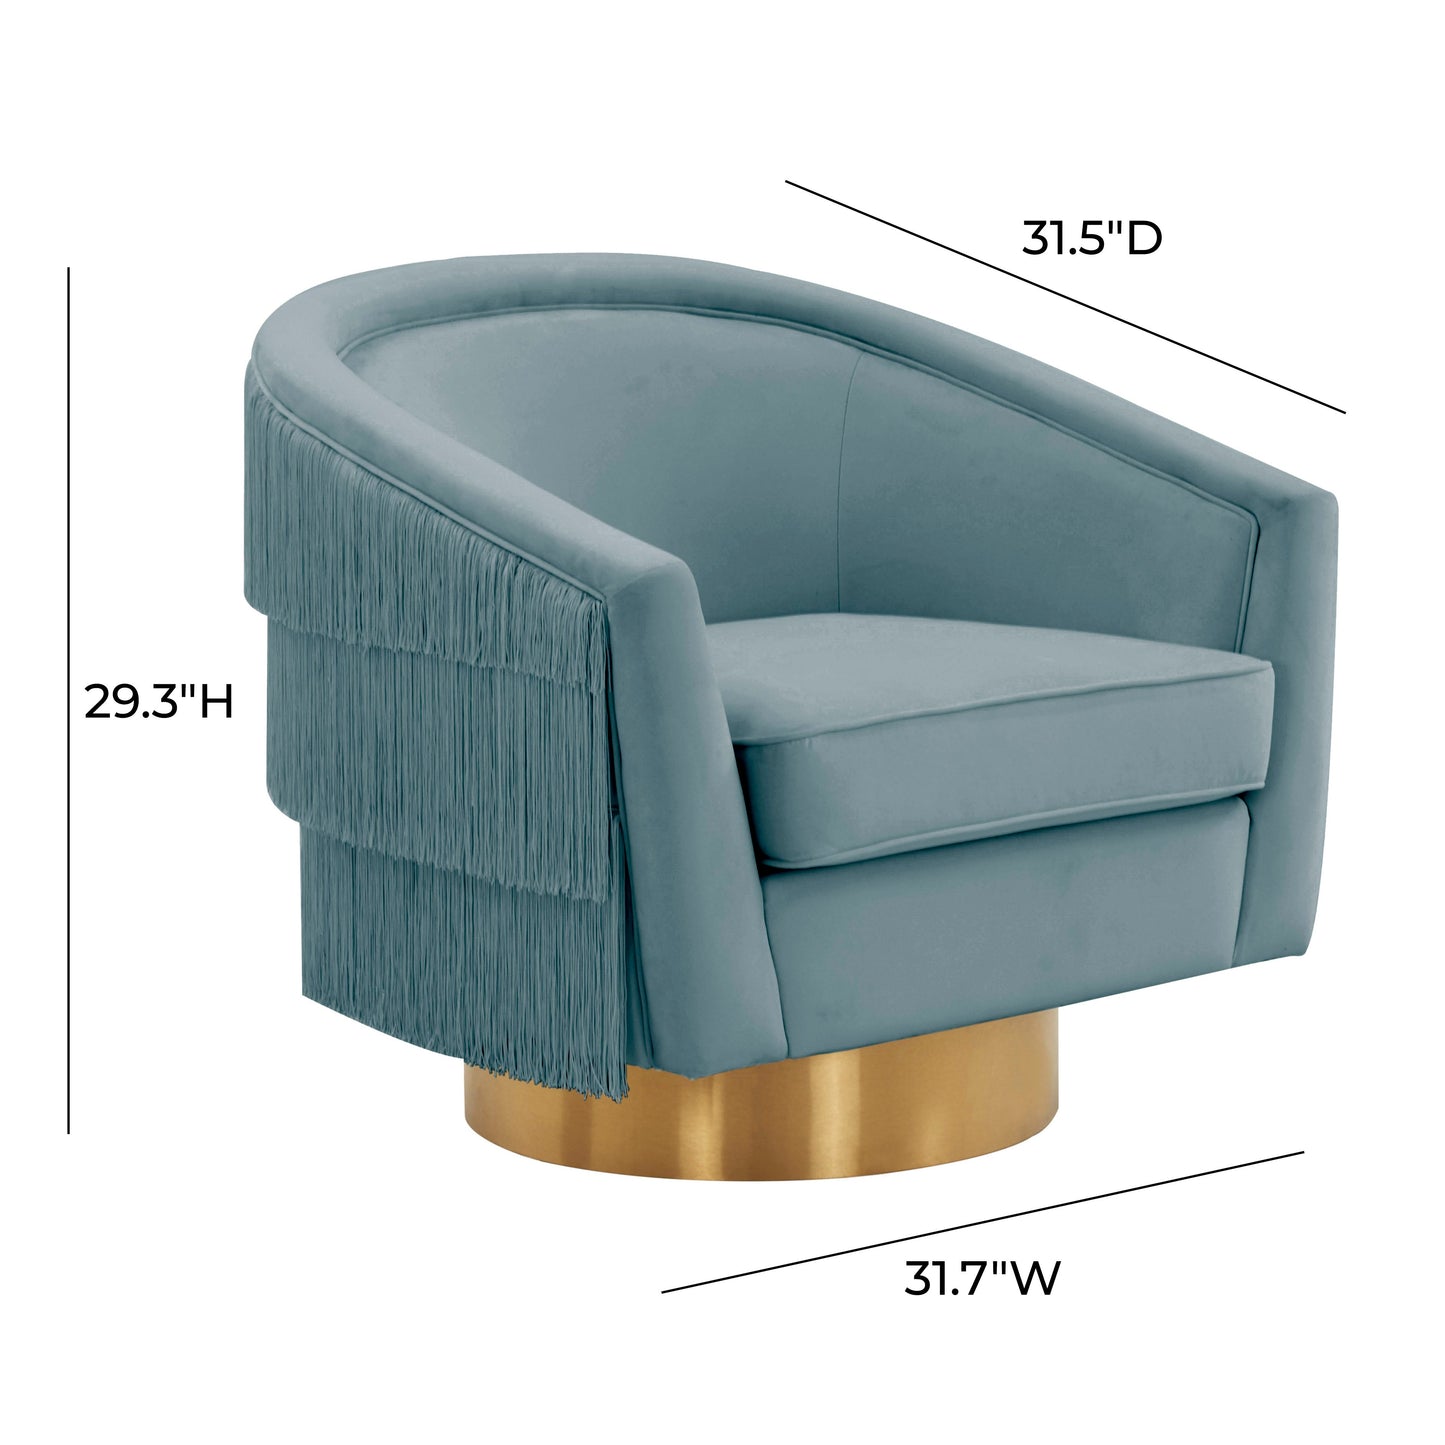 Flapper Bluestone Swivel Chair by TOV